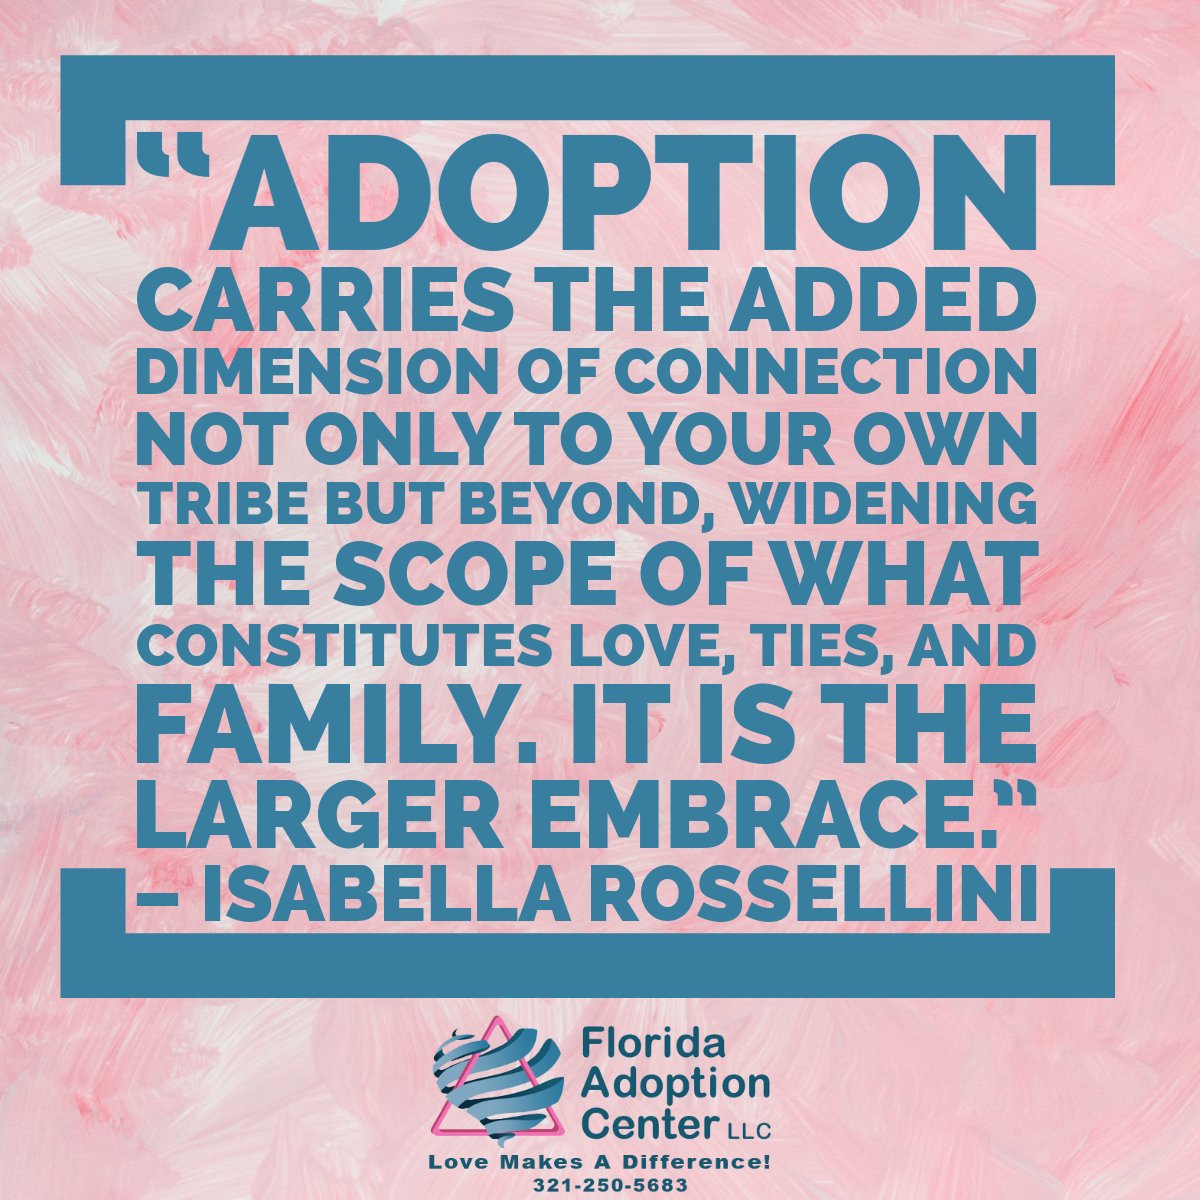 At Florida Adoption Center love makes a difference!

#FloridaAdoptionCenter #AdoptionSupport #AdoptionInformation #AdoptionEducation #Adoption #AdoptionFlorida #AdoptionInspiration #AdoptionJourney #FloridaAdoption #AdoptionQuestions #AdoptionAgencyFlorida #OpenAdoption